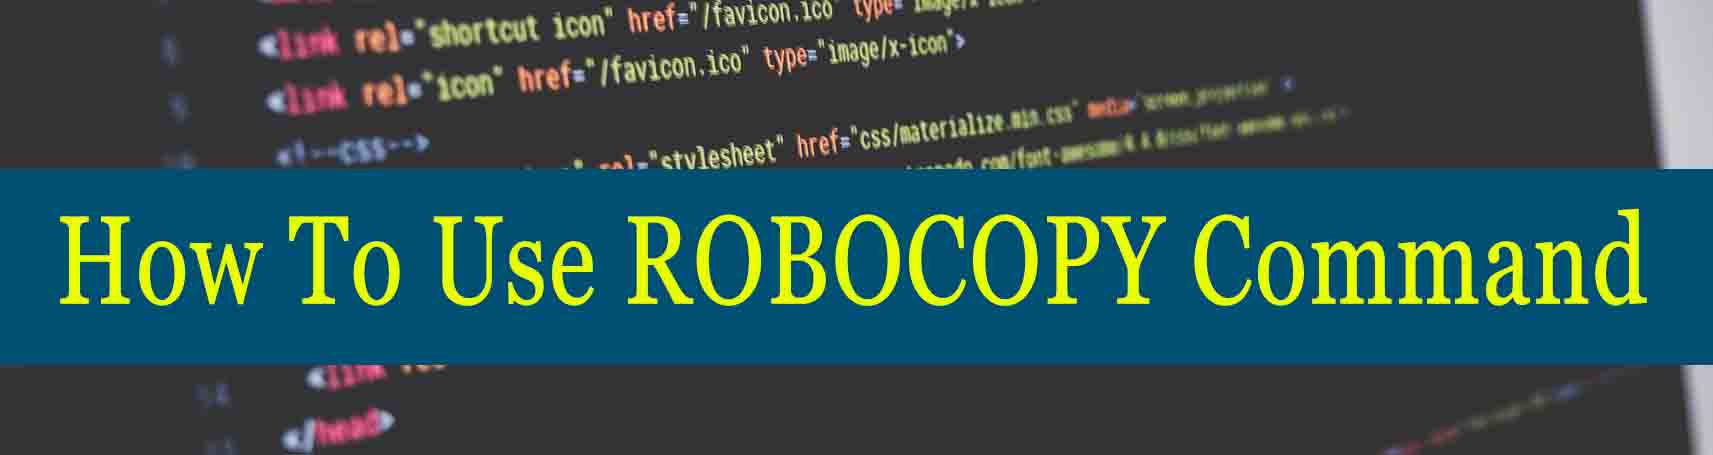 how to use robocopy